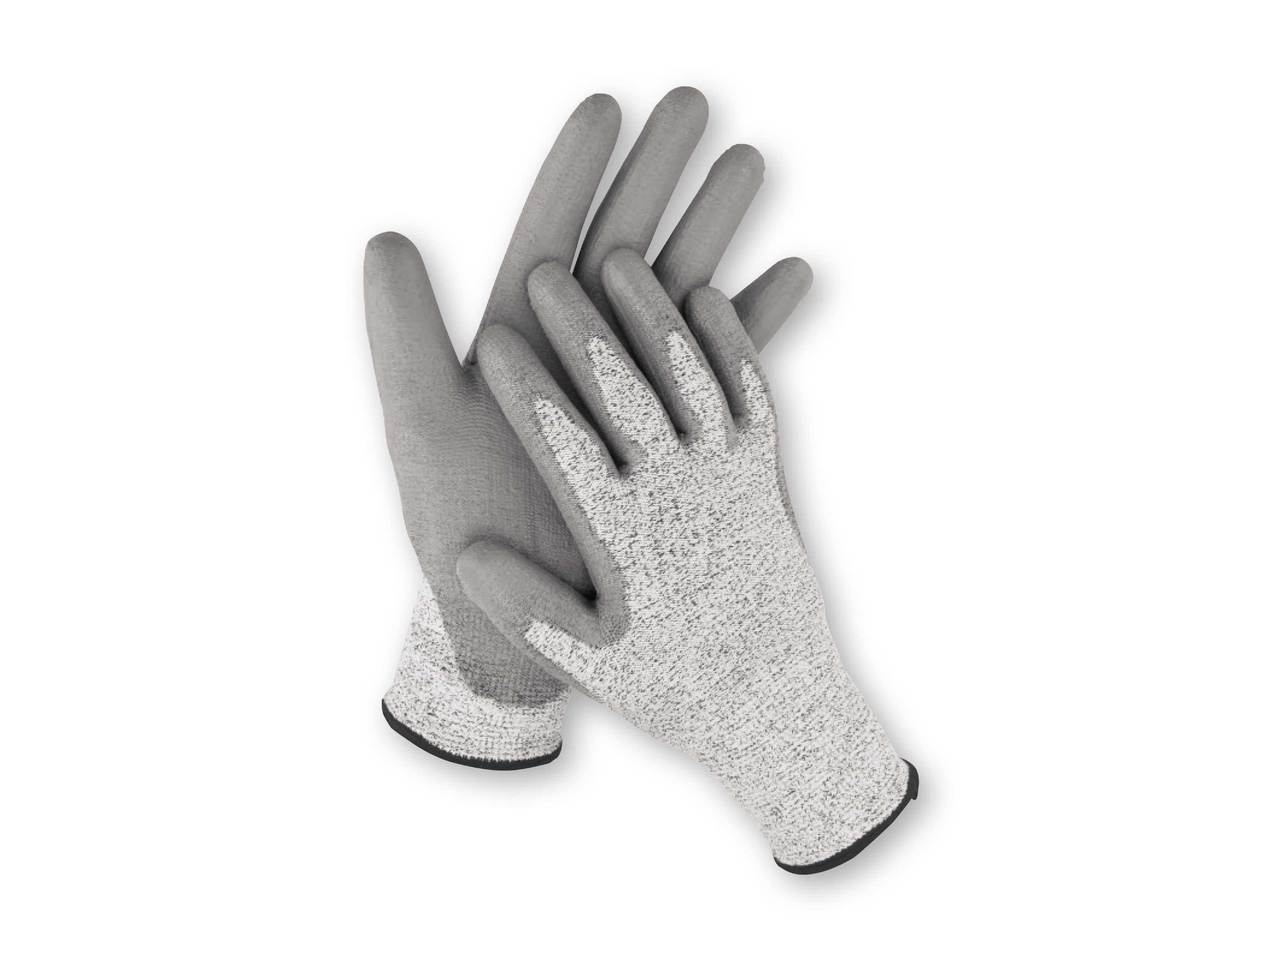 POWERFIX Protective Gloves